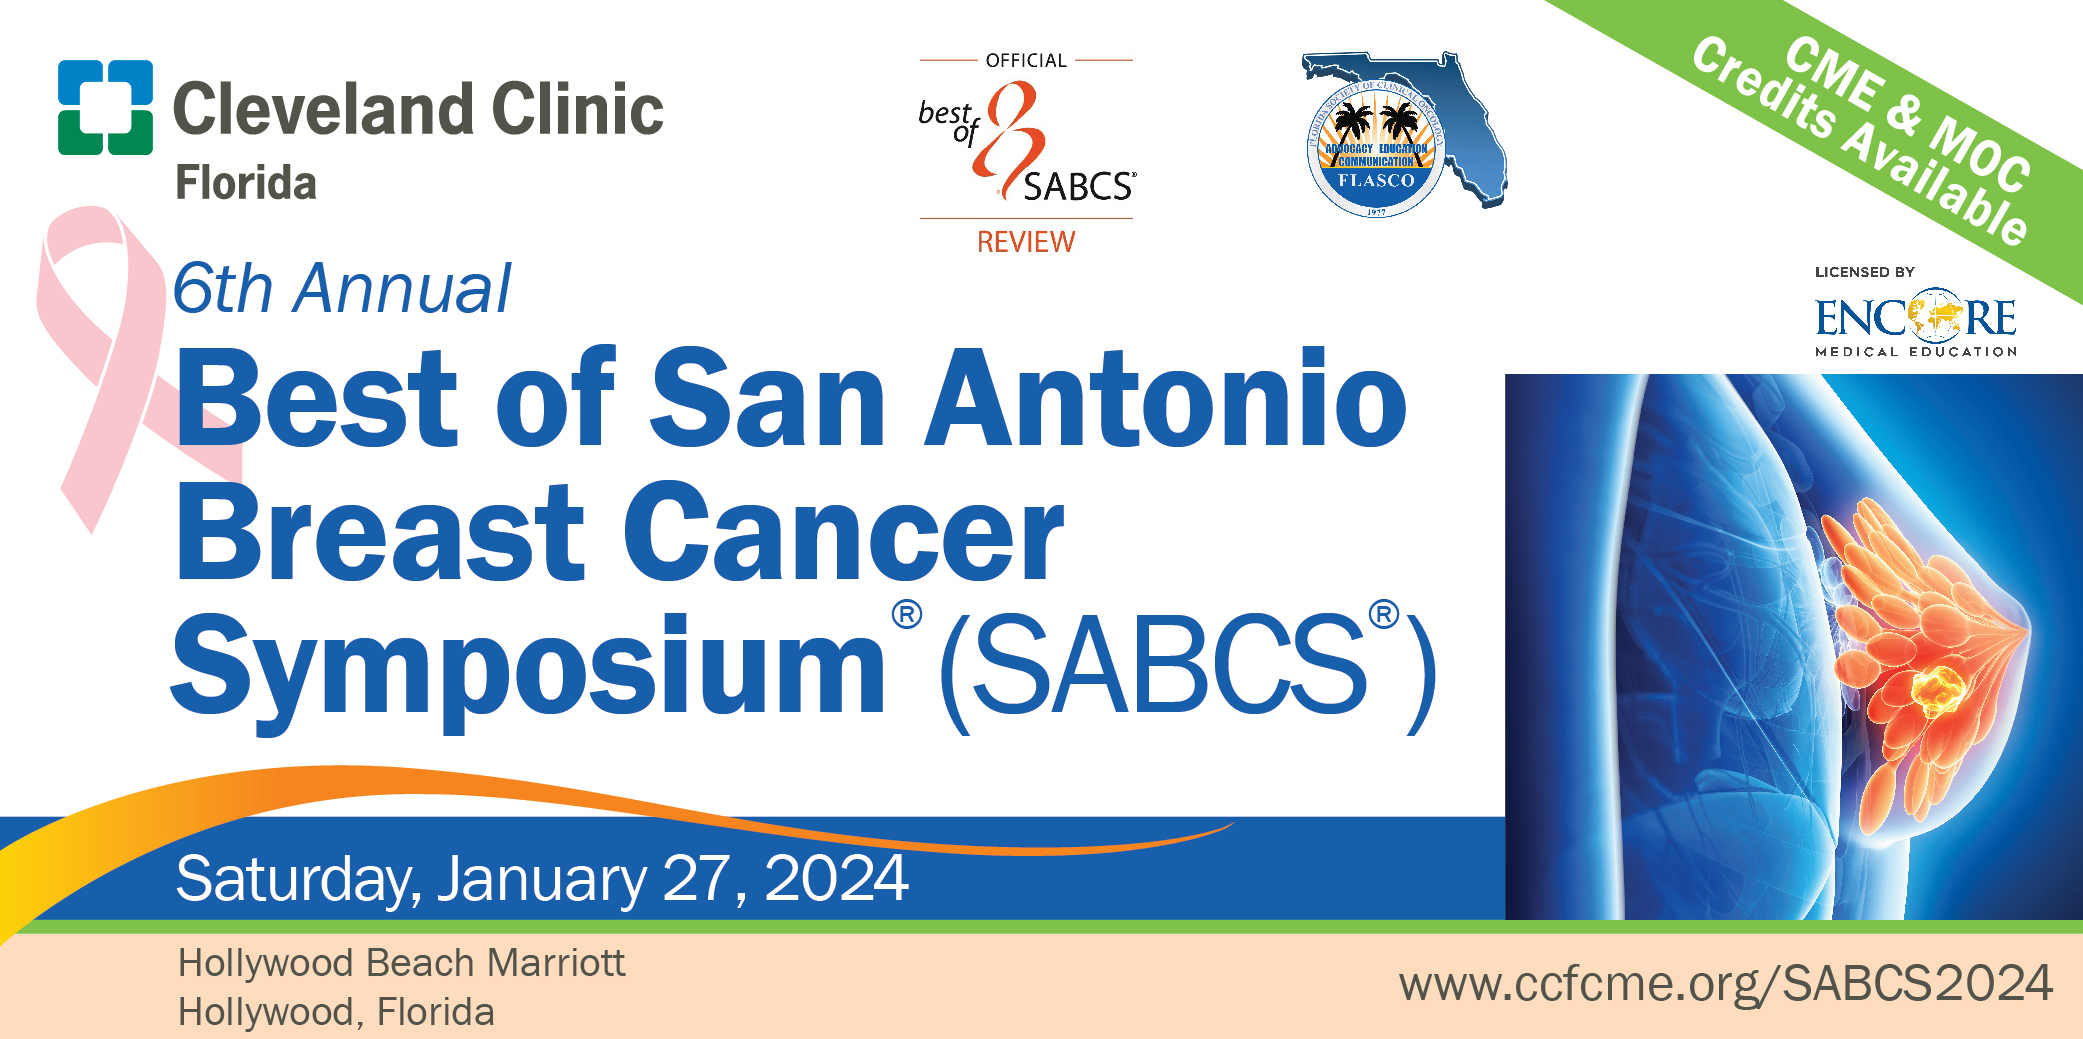 FLASCO / 6th Annual Best of San Antonio Breast Cancer Symposium (SABCS)